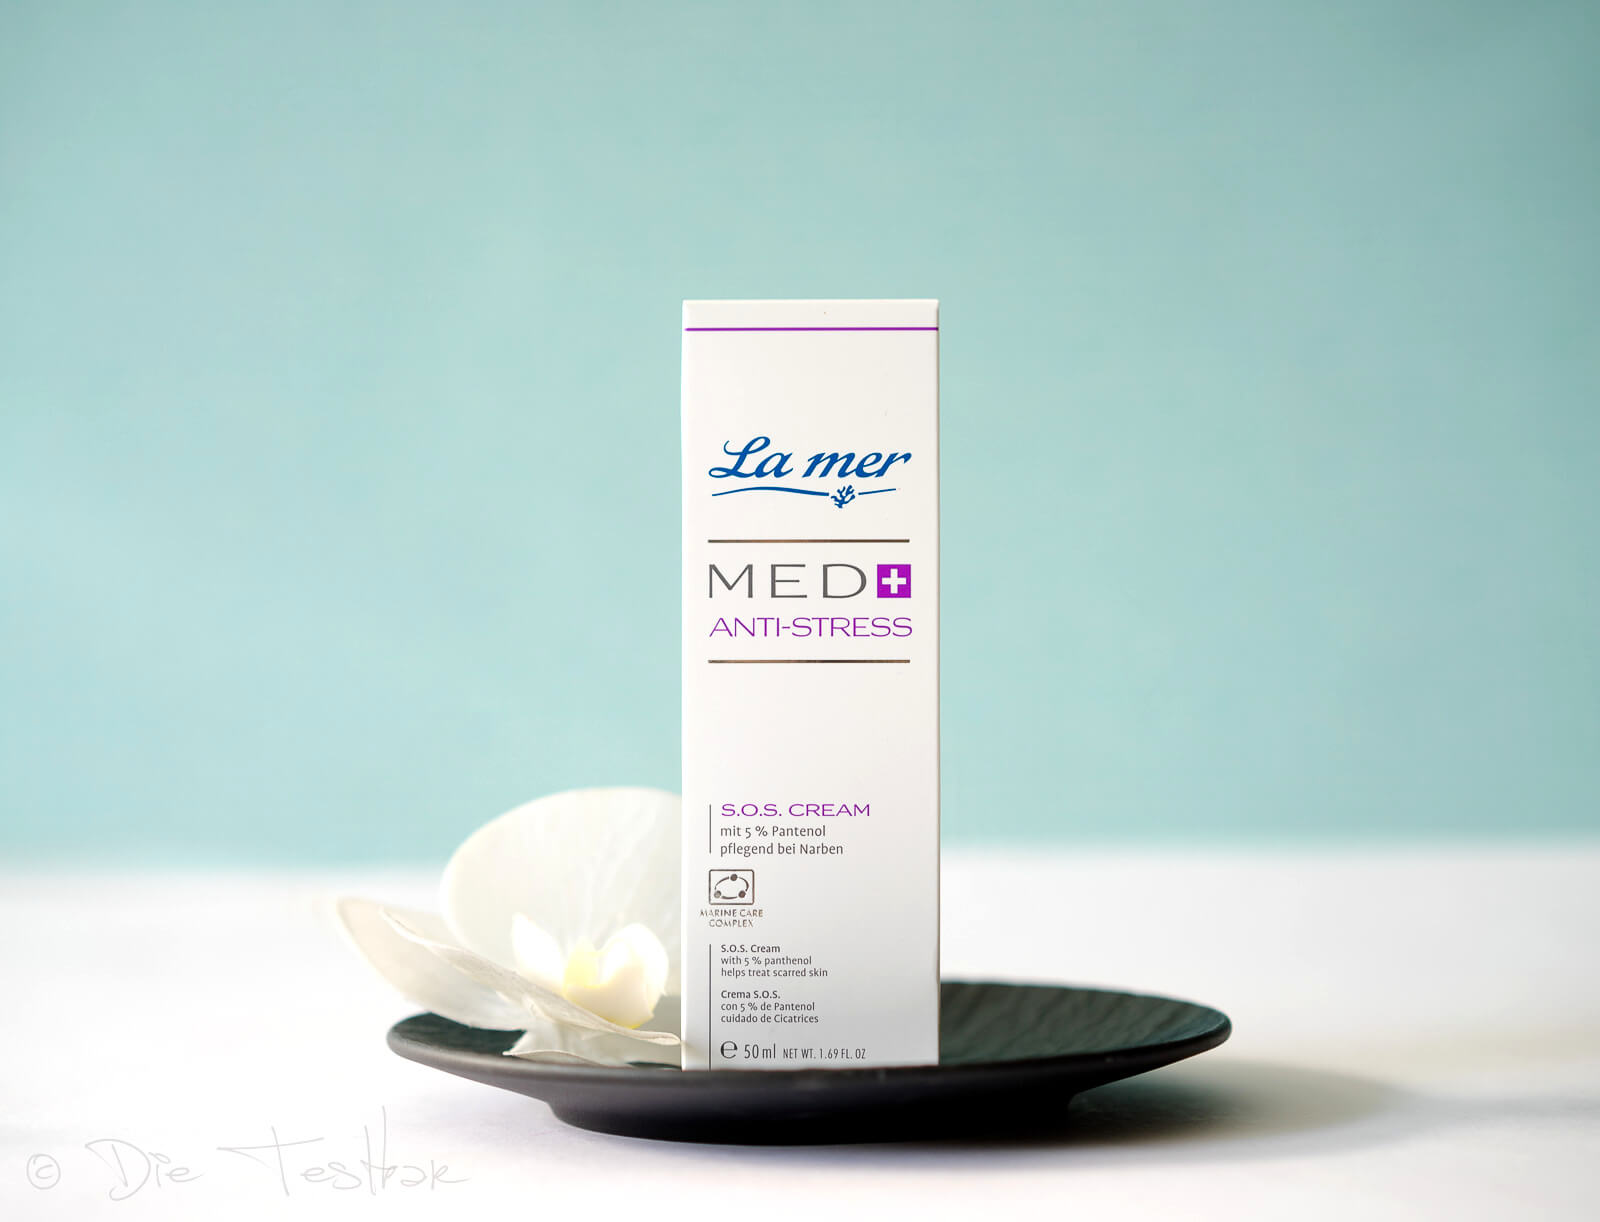 La mer Med+ Anti-Stress S.O.S. Cream